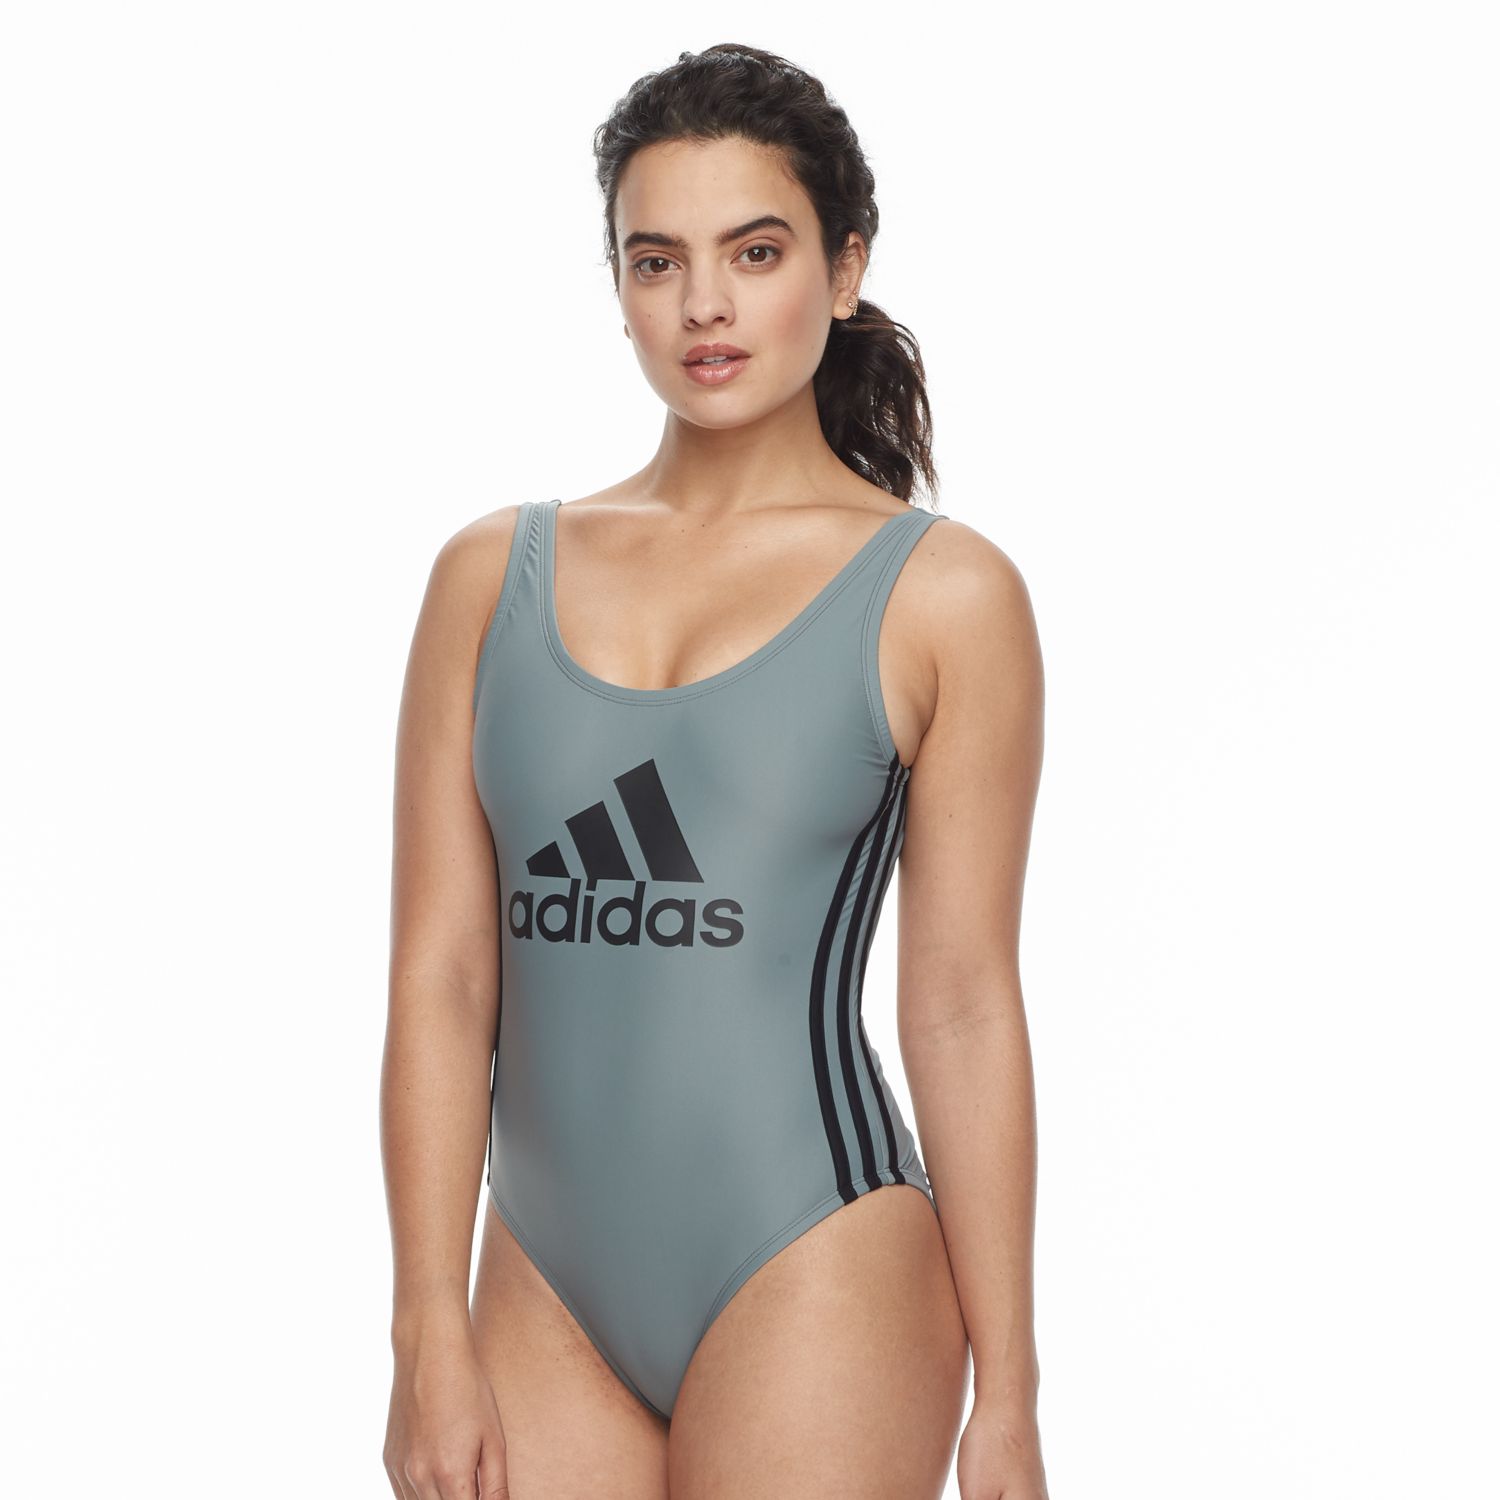 adidas logo one piece swimsuit